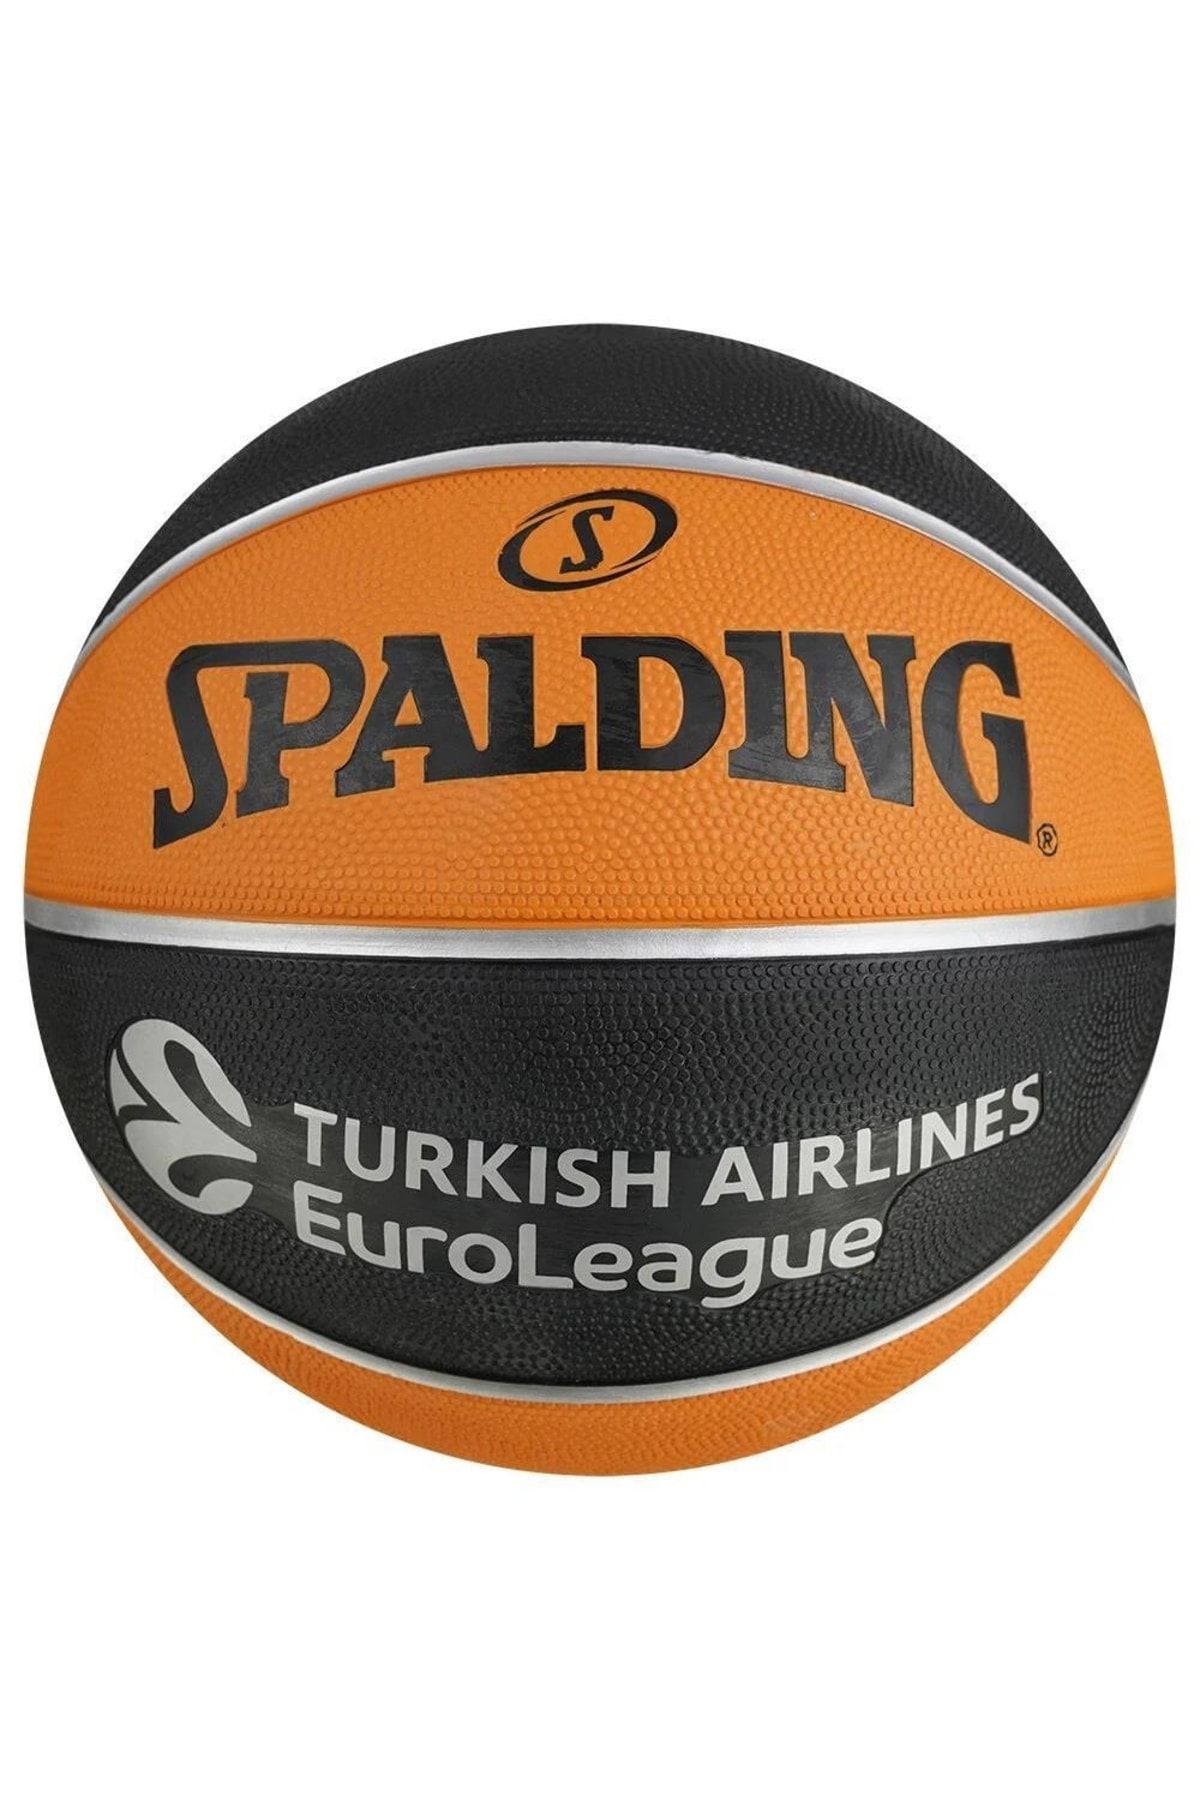 Spalding Tf150 Varsity Euroleague Kauçuk 7 No Basketbol Topu